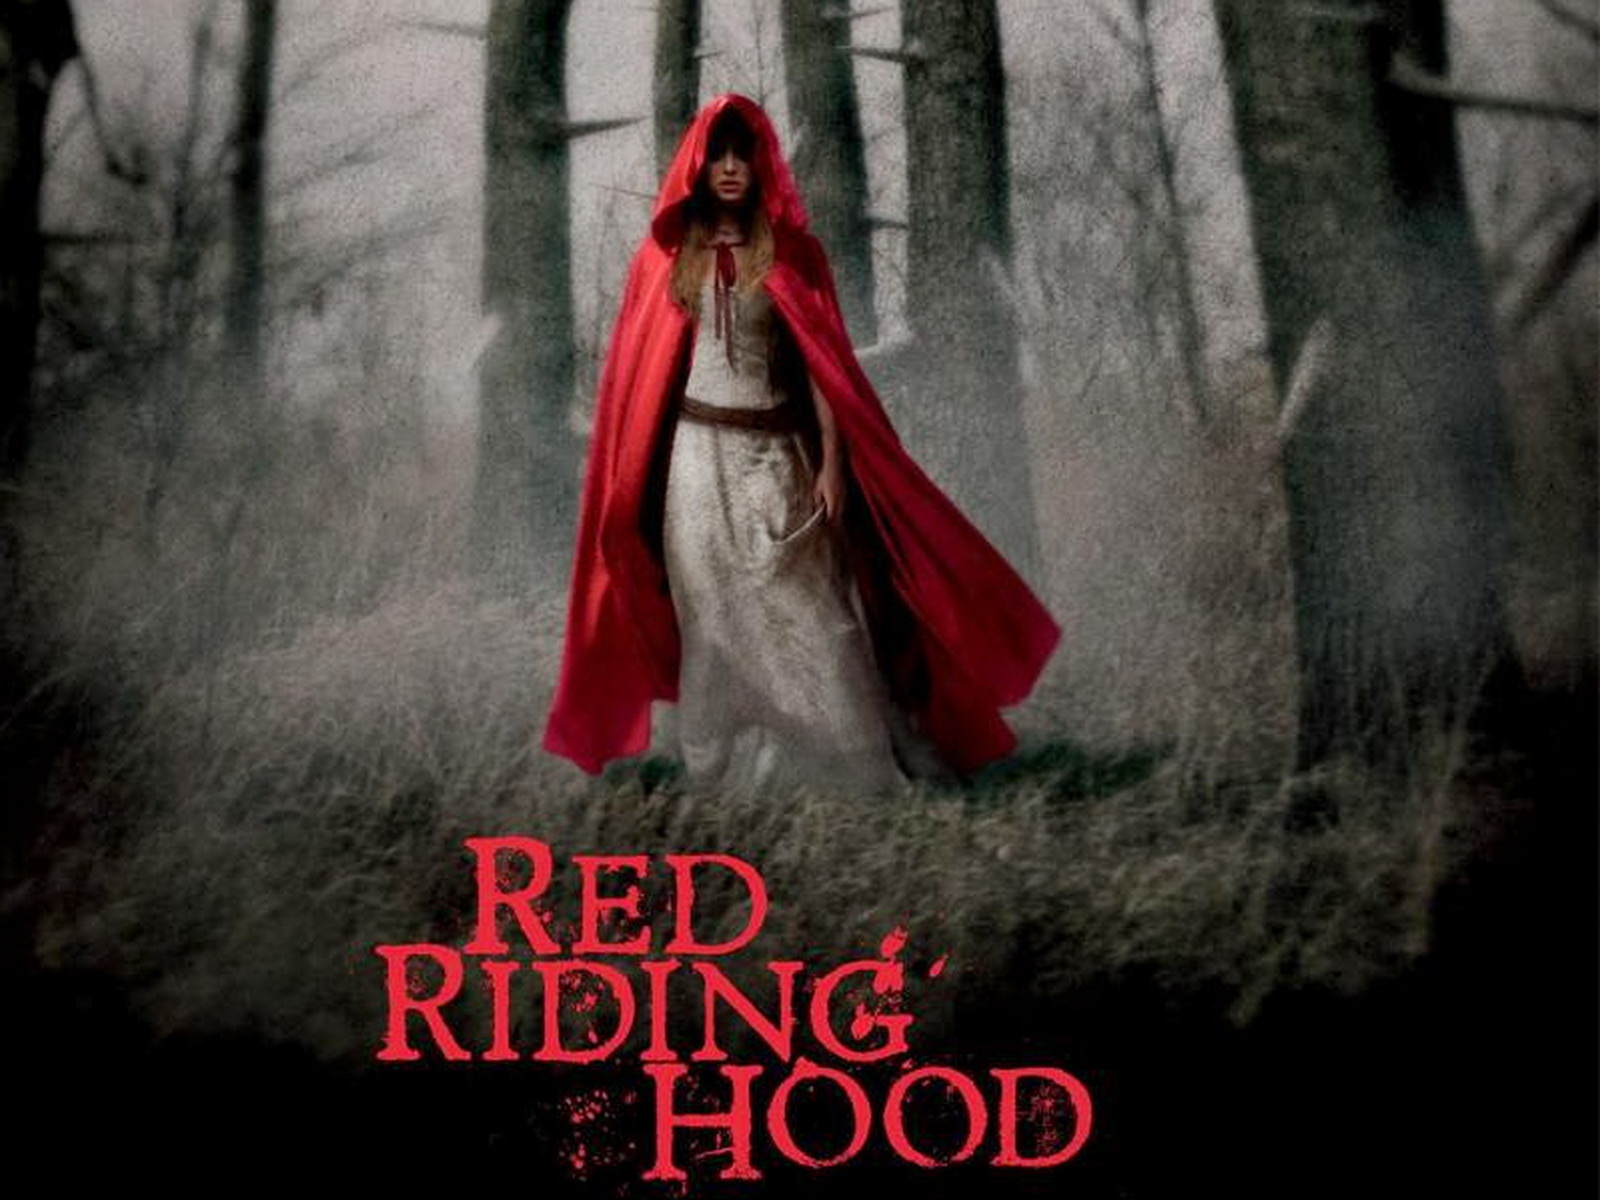 Red Riding Hood Image Wallpaper Photos